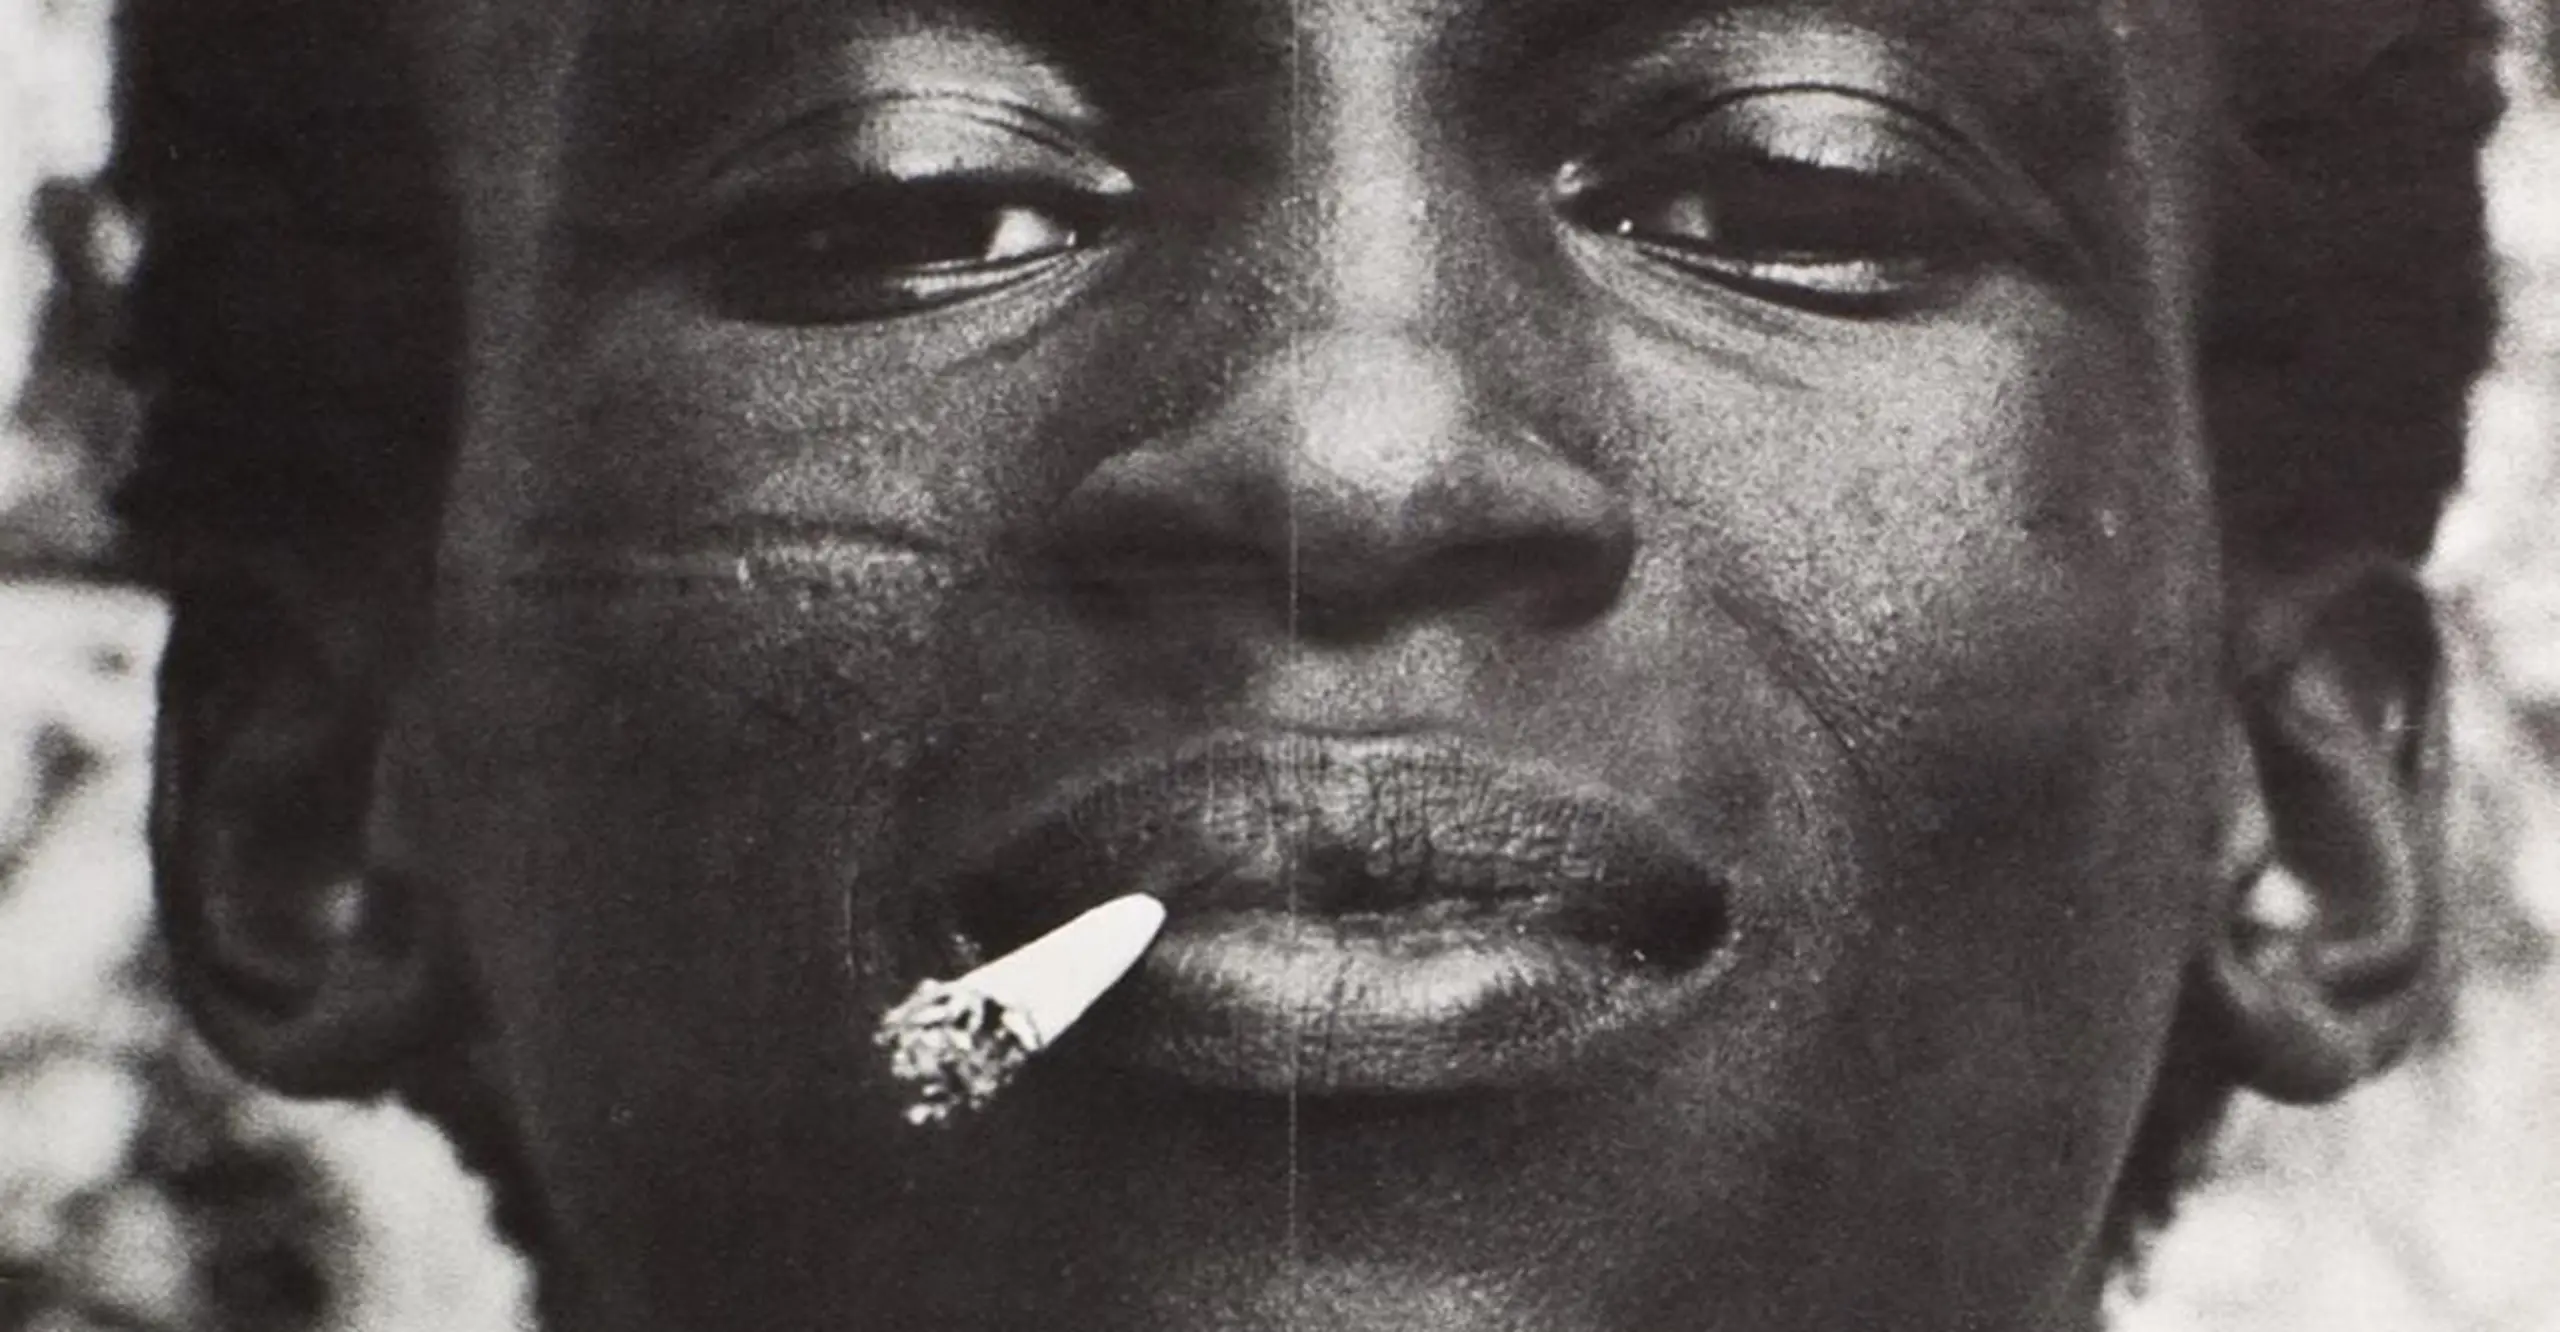 Colin Jones - The Black House poster. Ephemera courtesy The Photographers' Gallery Archive